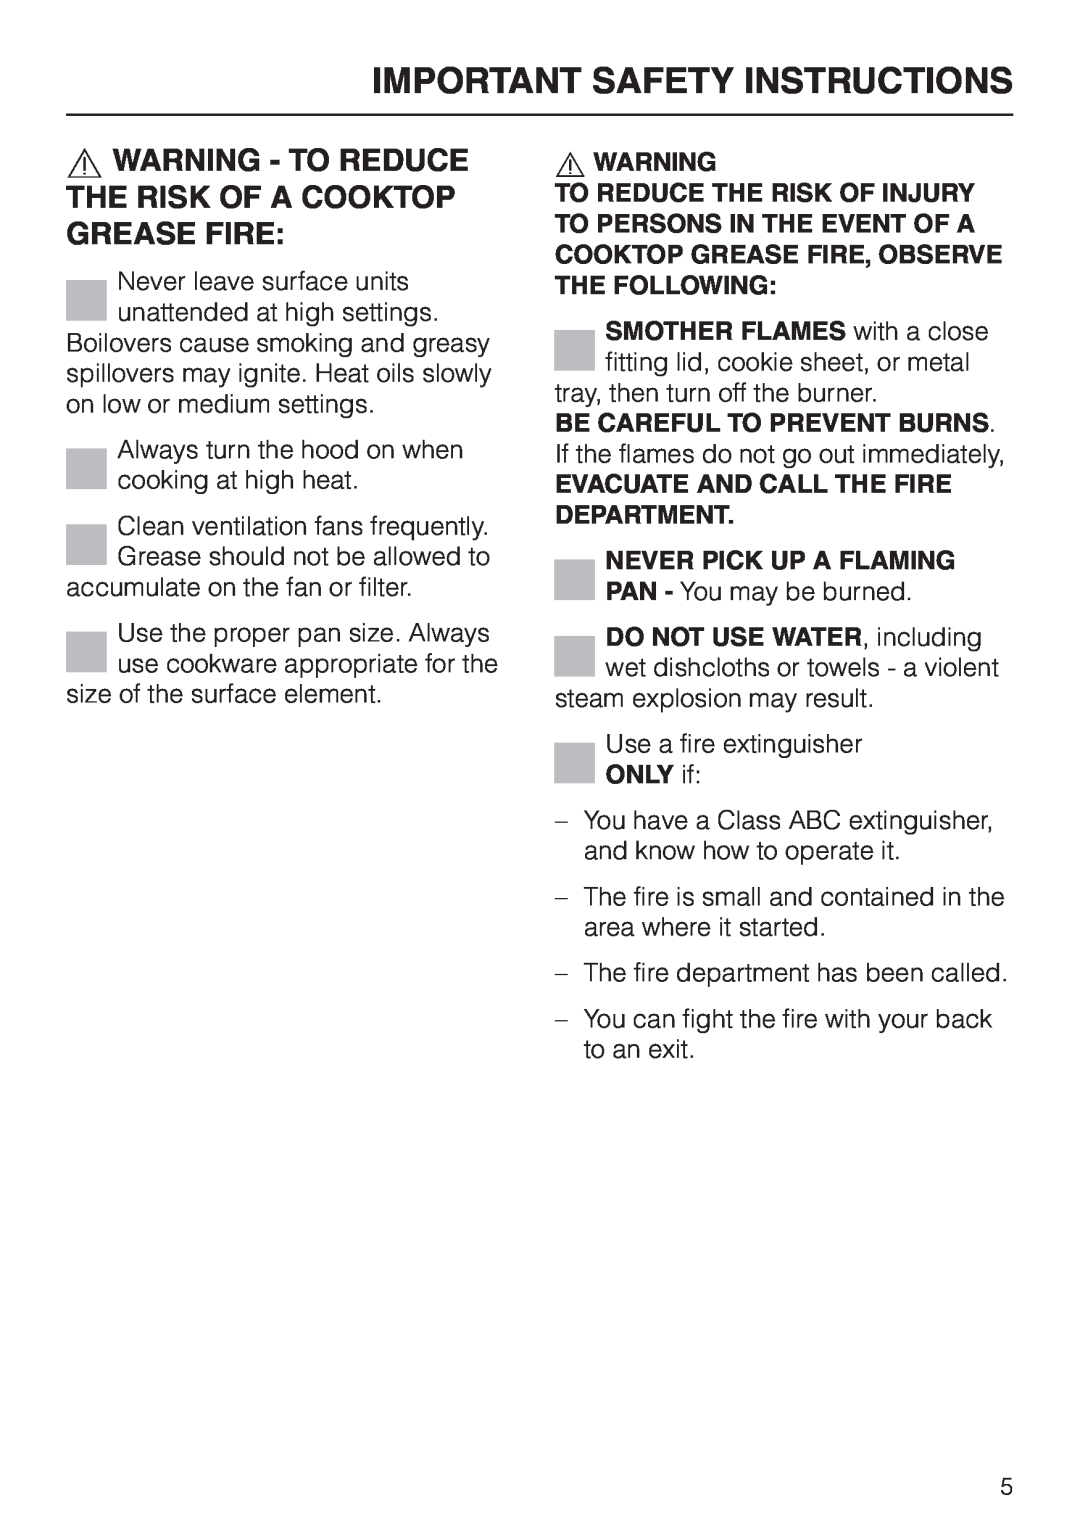 Miele DA 3160, DA 3180, DA3190 installation instructions Important Safety Instructions, Be Careful To Prevent Burns 